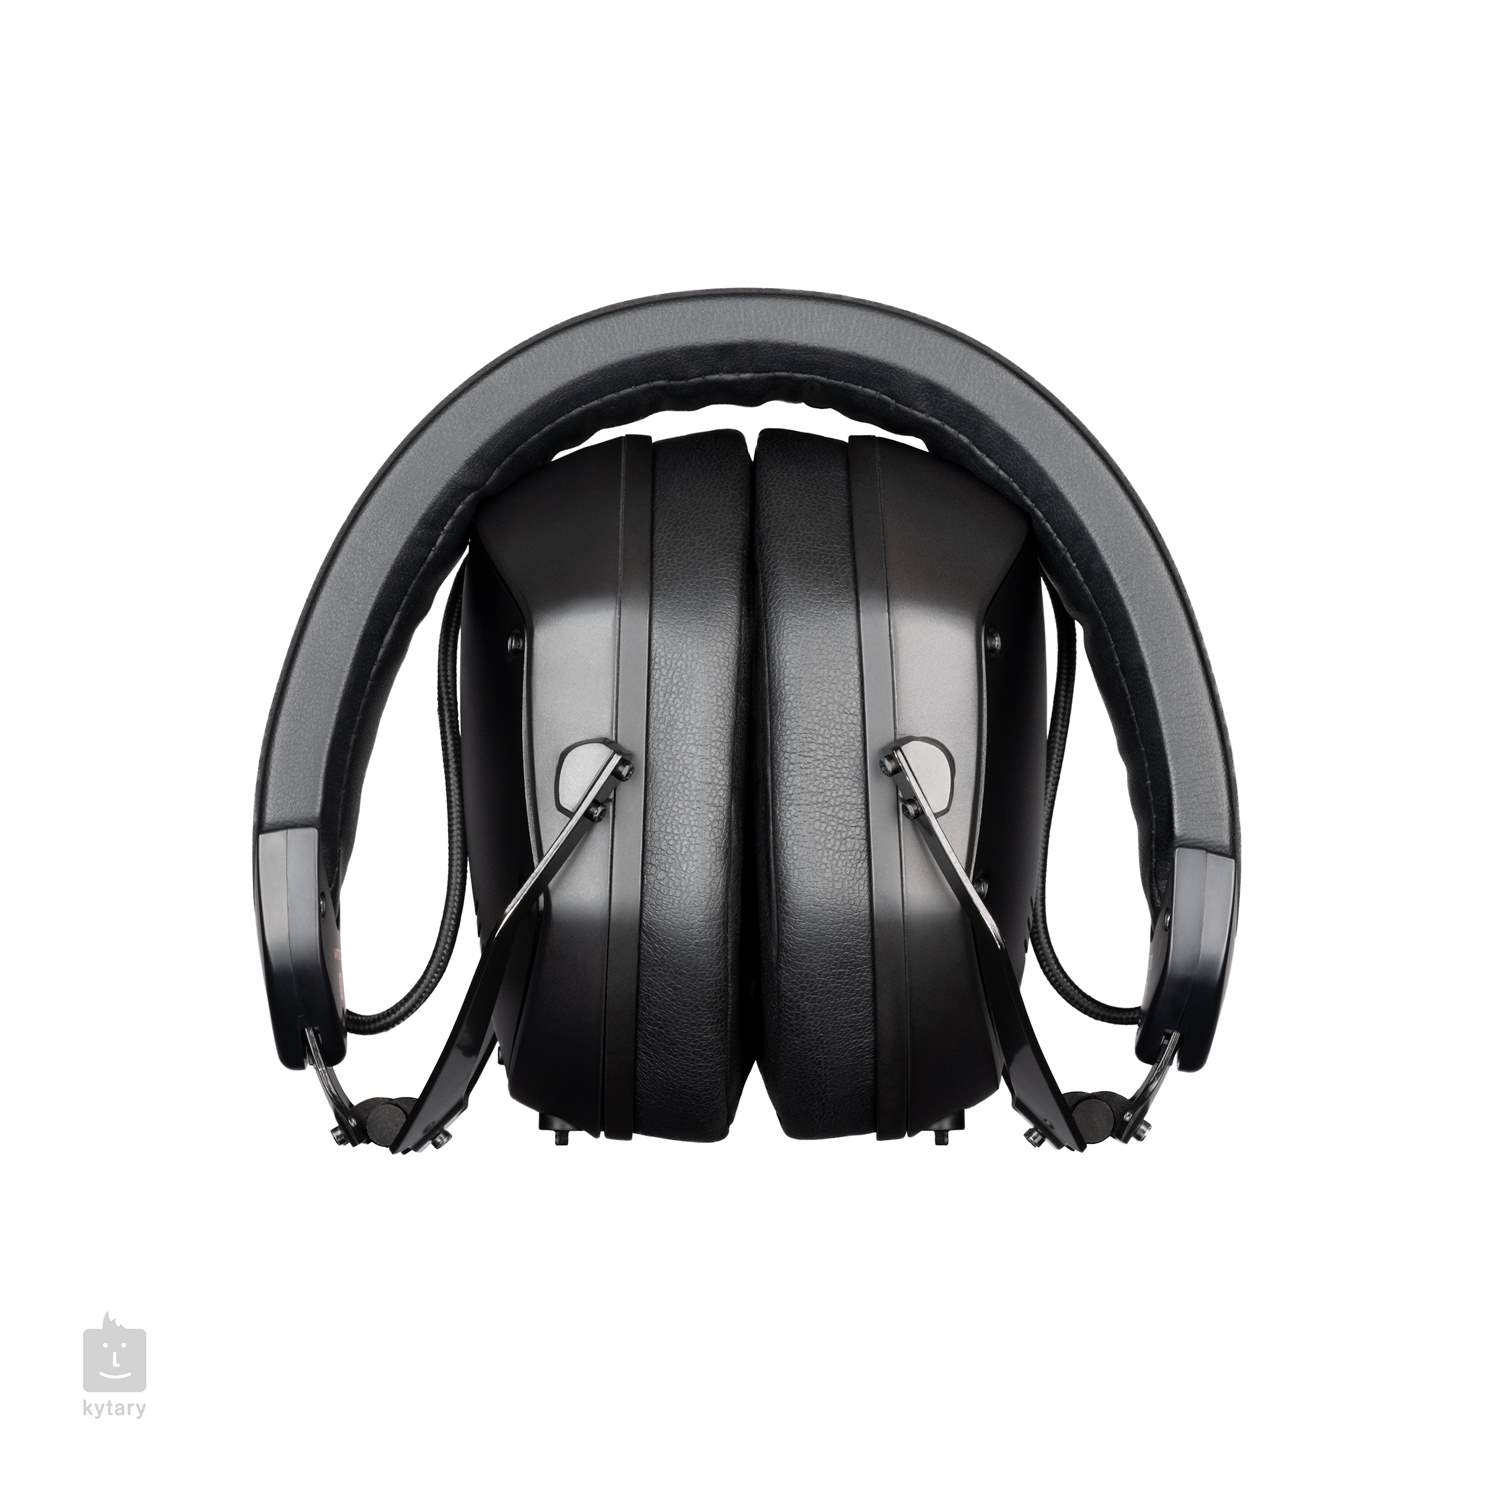 V-MODA M-200 BLACK Headphones